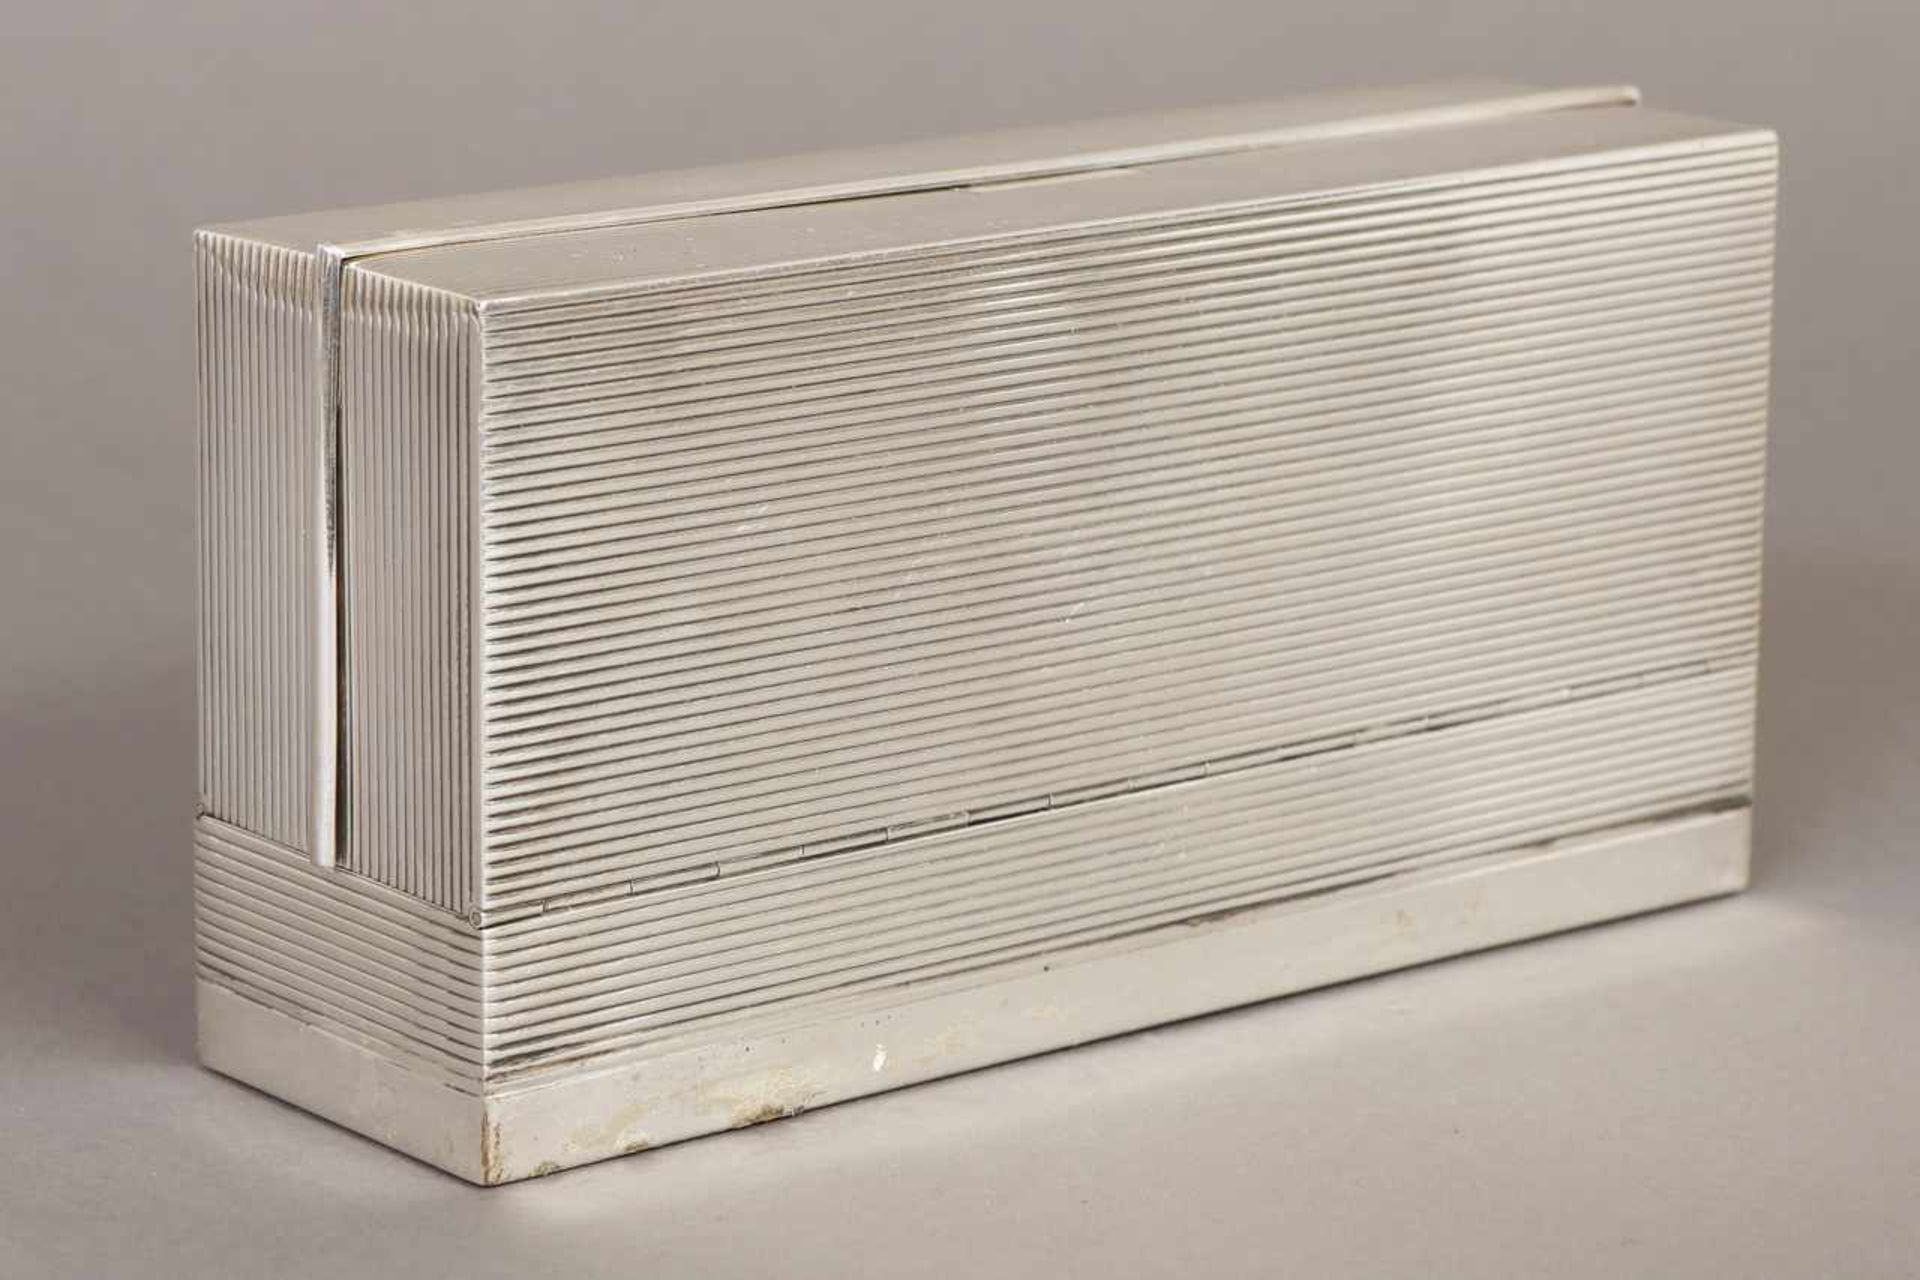 Silber-Schatulle Sterling Silber (gestempelt), um 1960, rechteckiger Korpus mit Rillendekor,